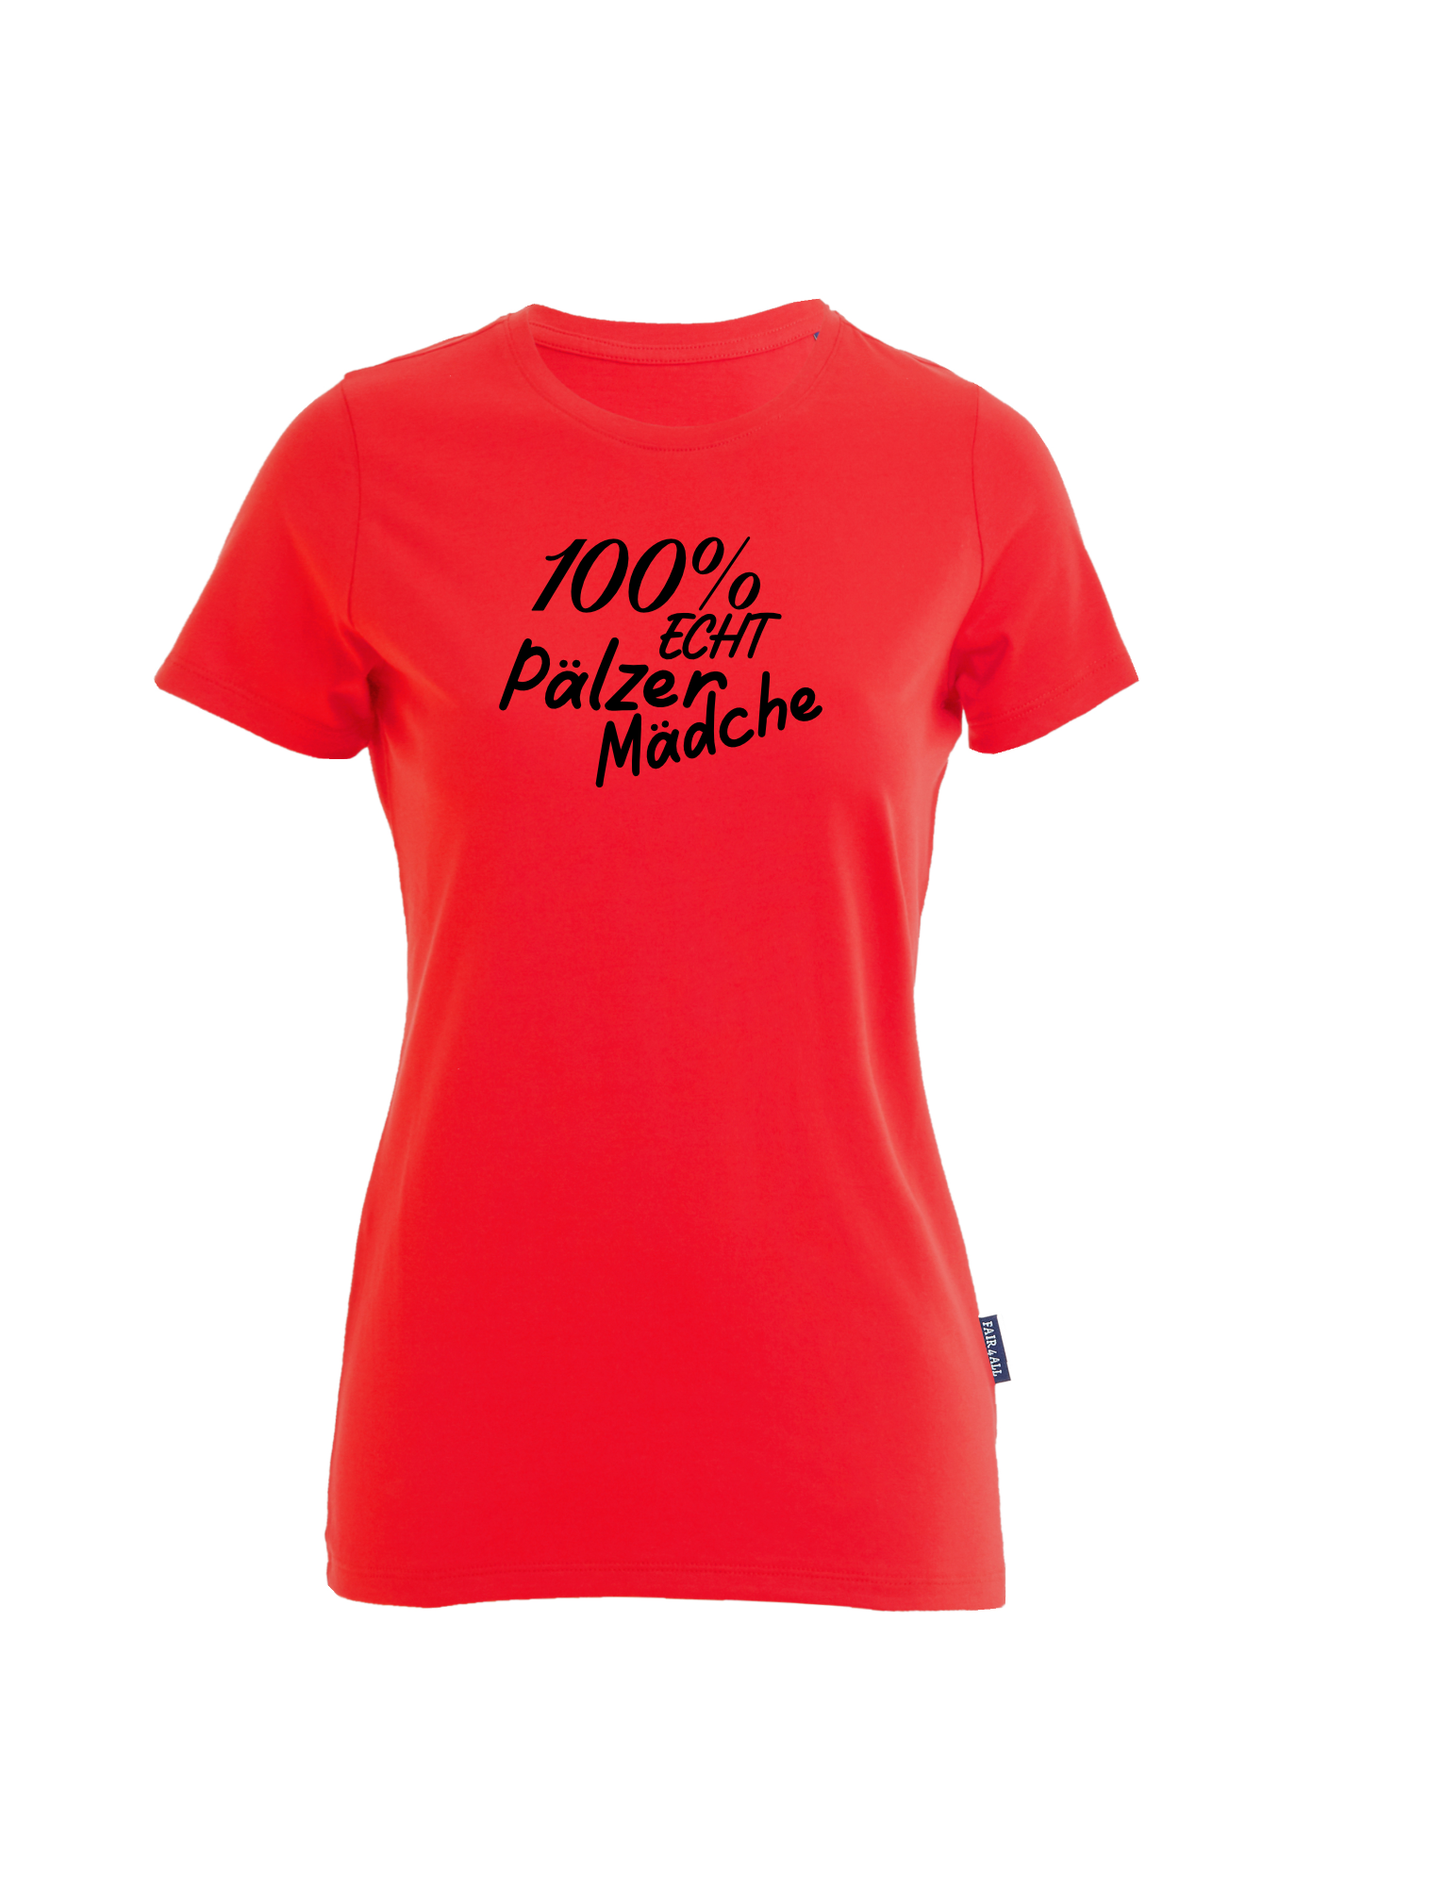 100% Pälzer Mädche - pREHmium T-Shirt Damen